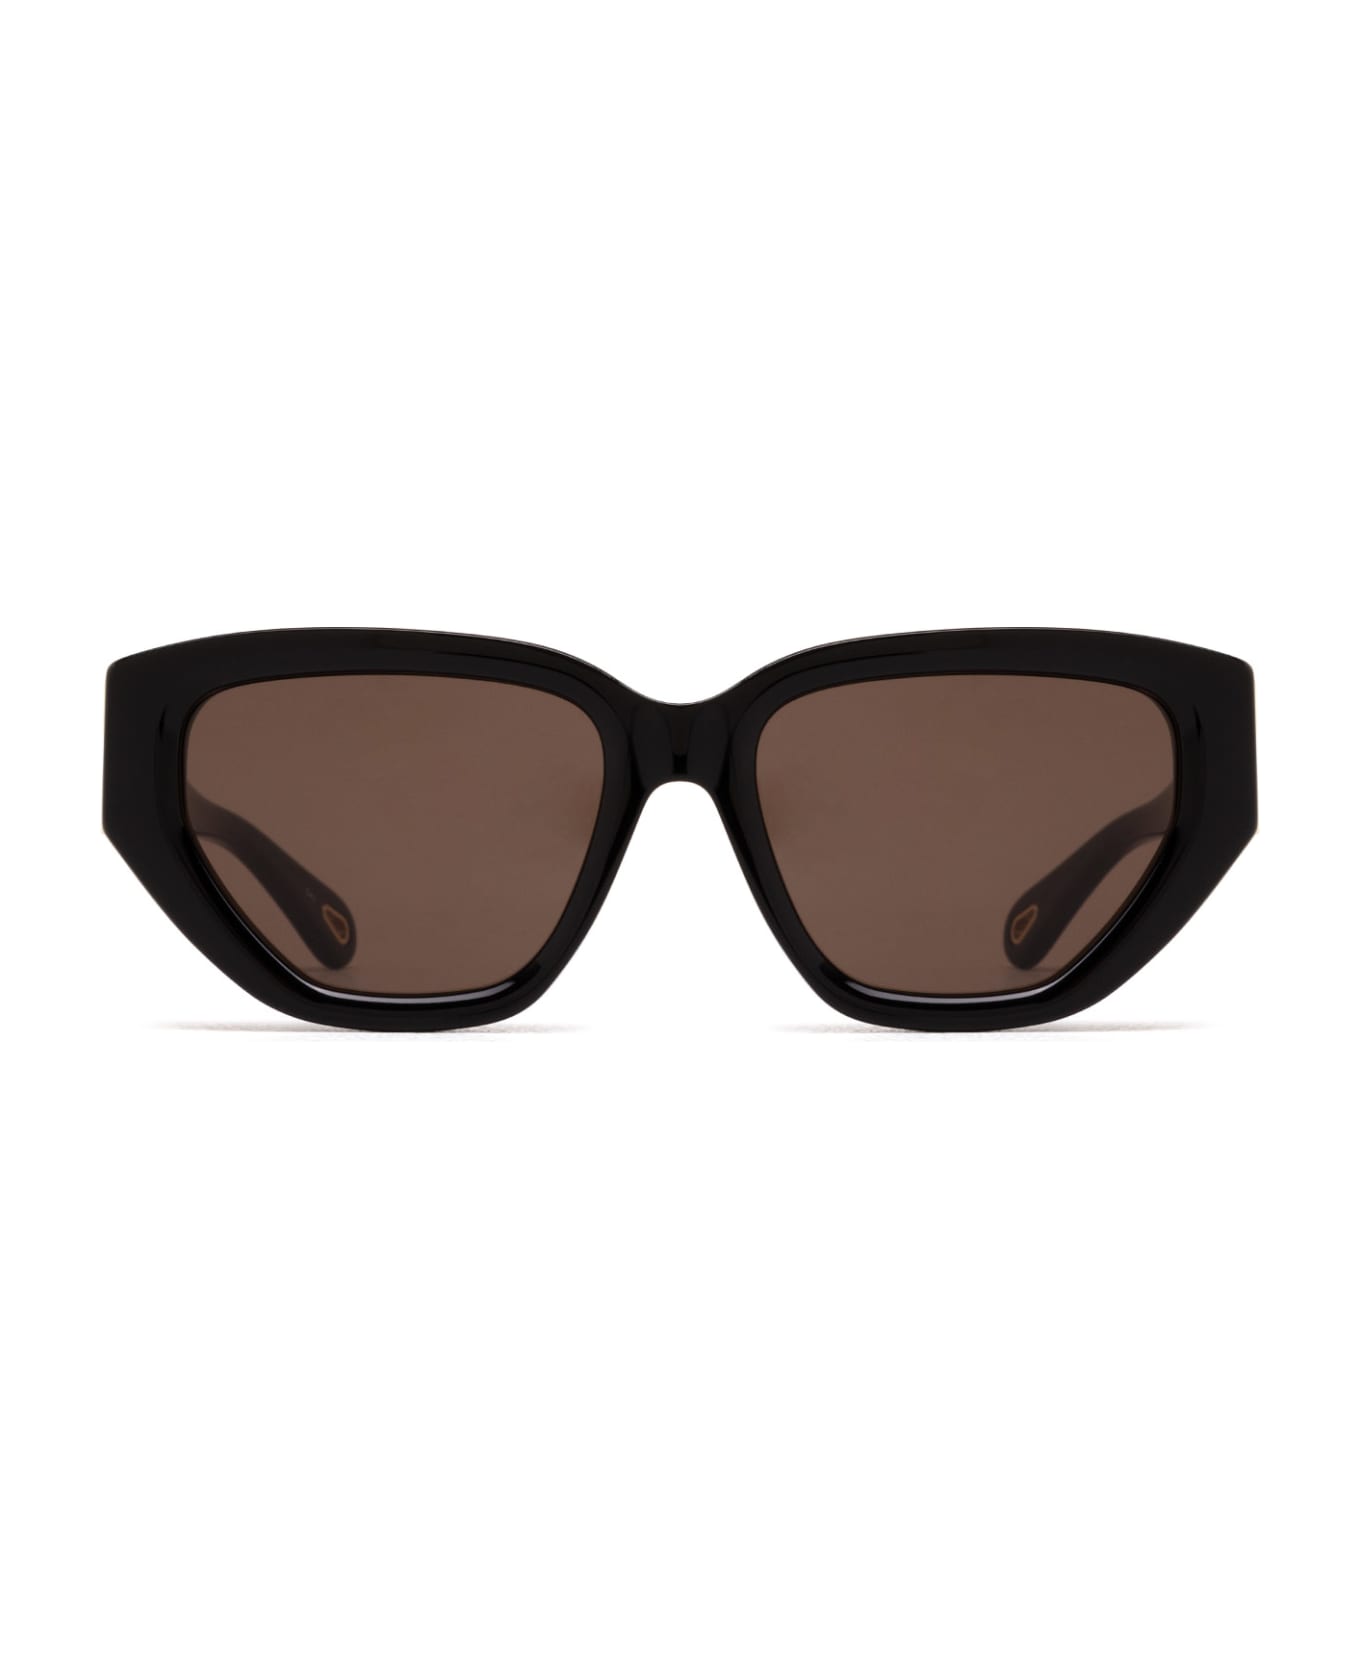 Chloé Eyewear Ch0235s Black Sunglasses - Black サングラス